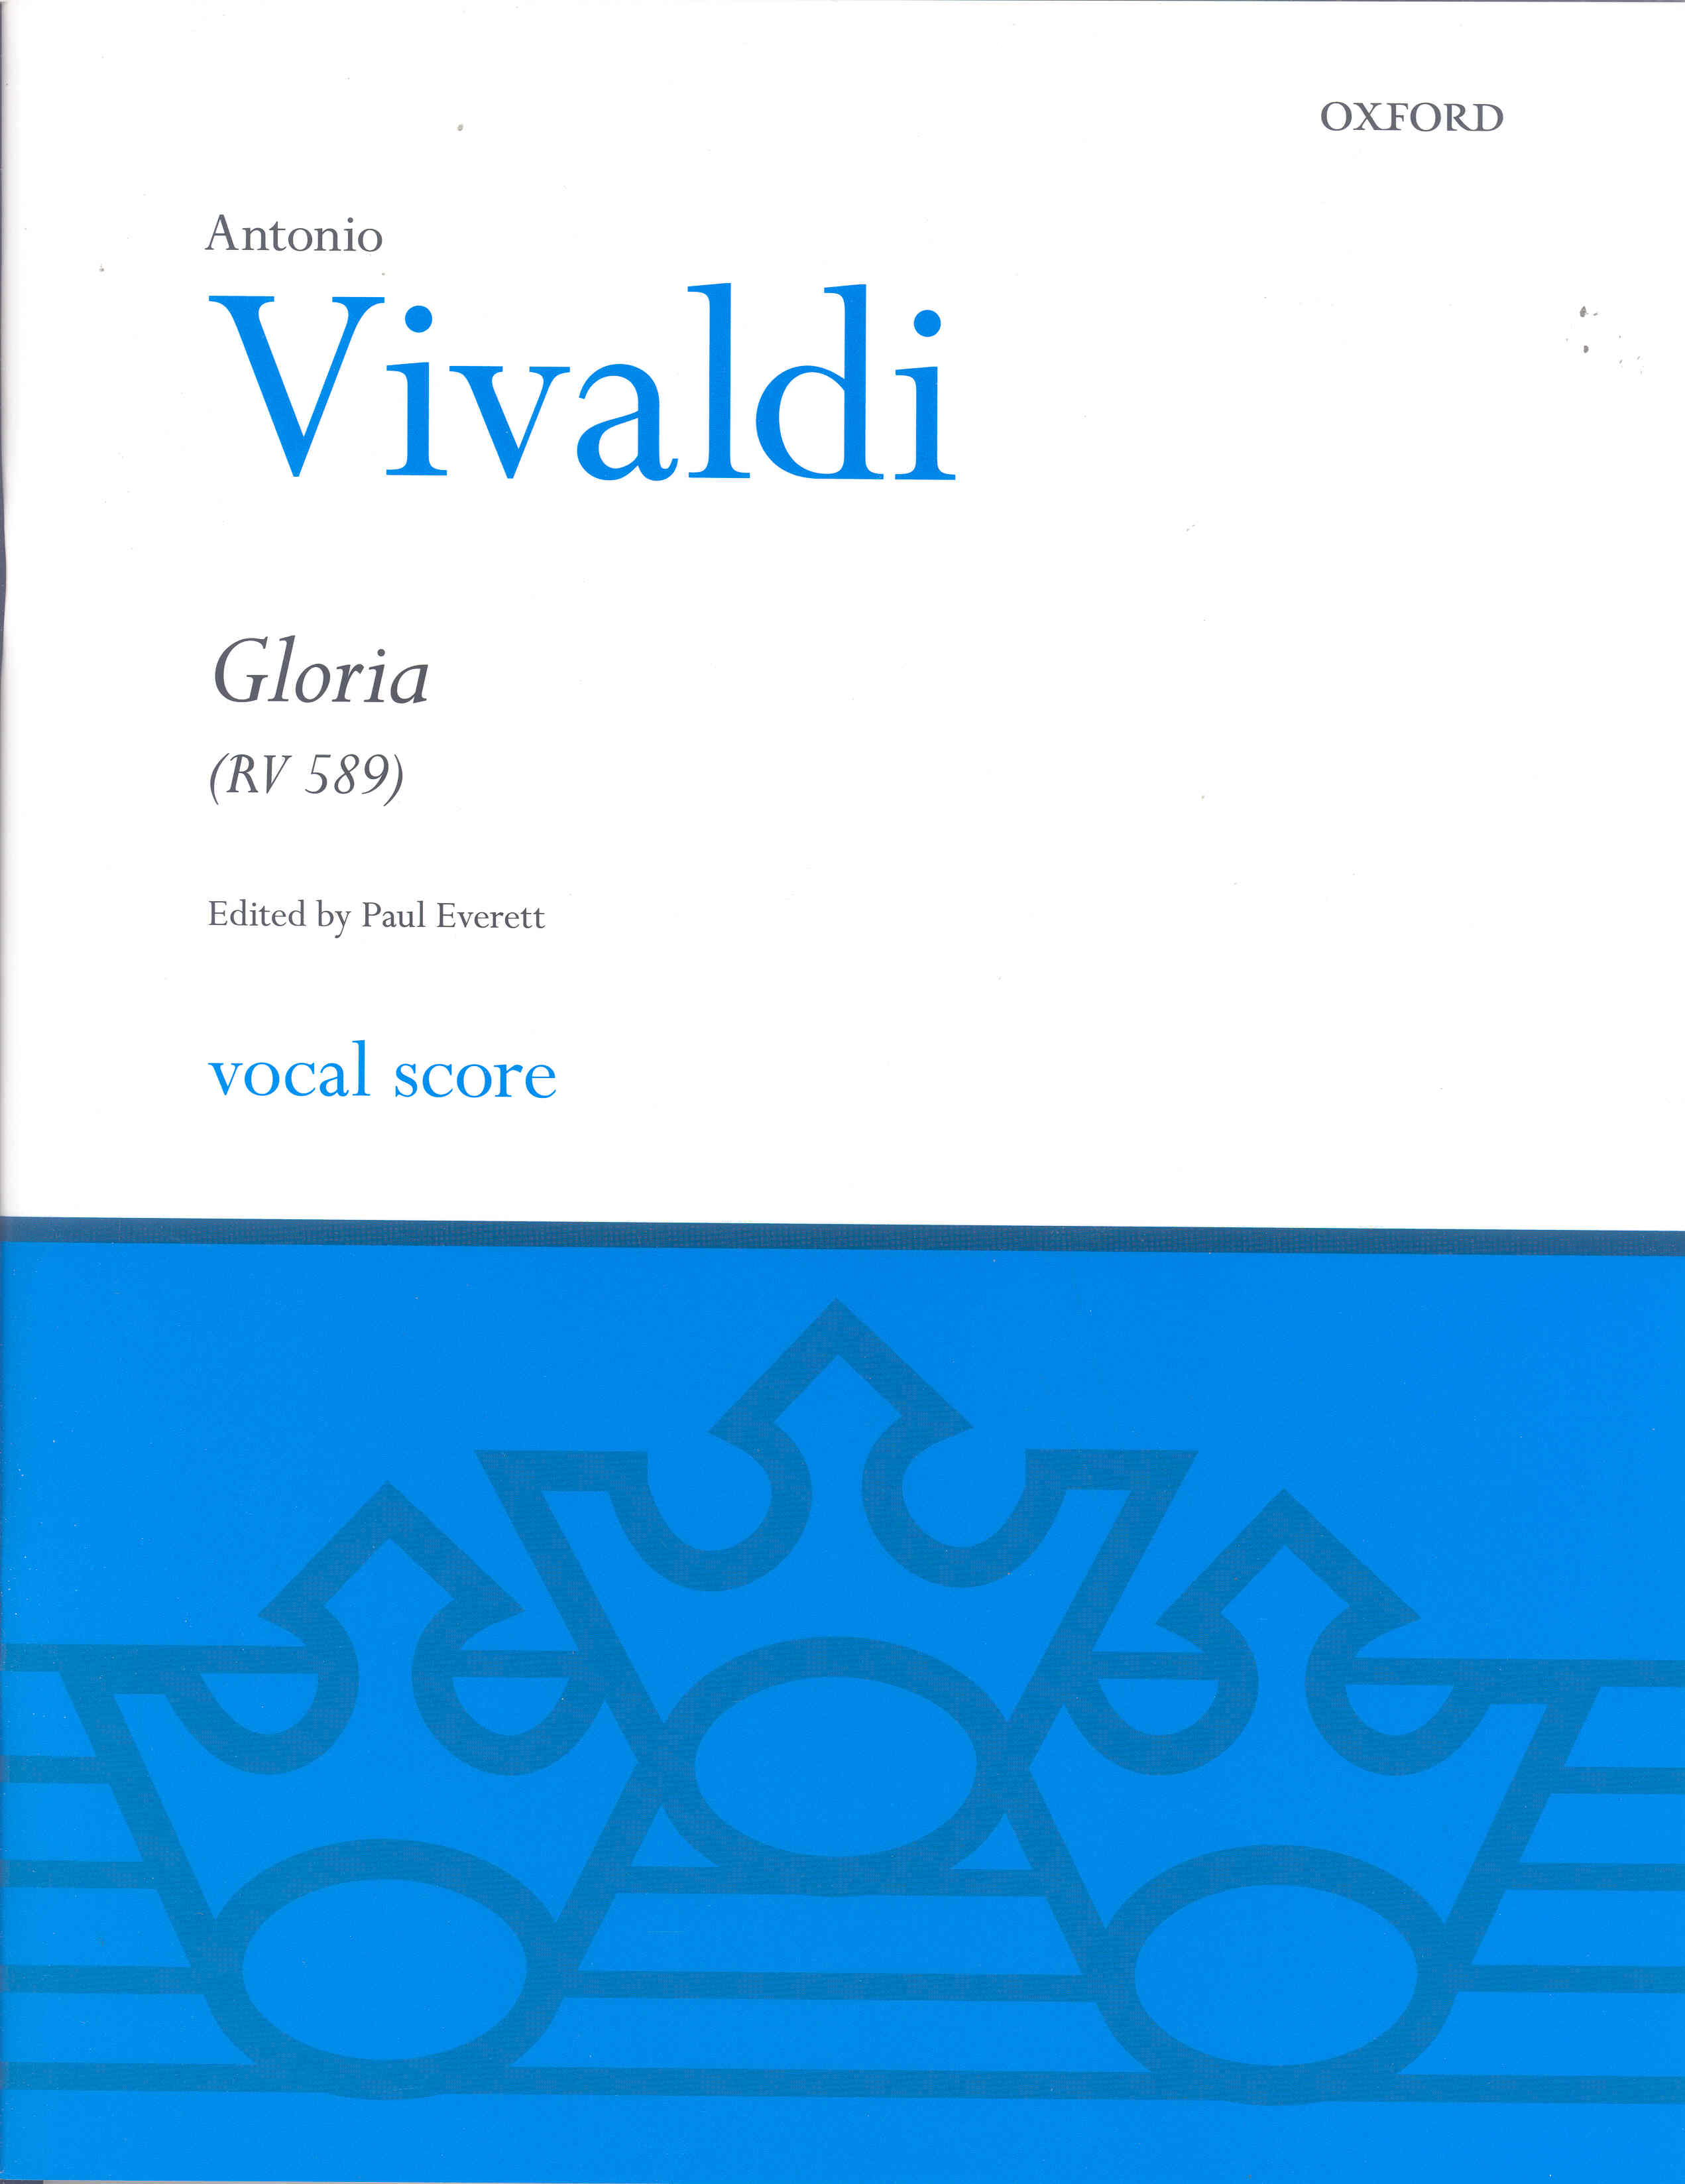 Vivaldi Gloria D Everett Vocal Score Sheet Music Songbook